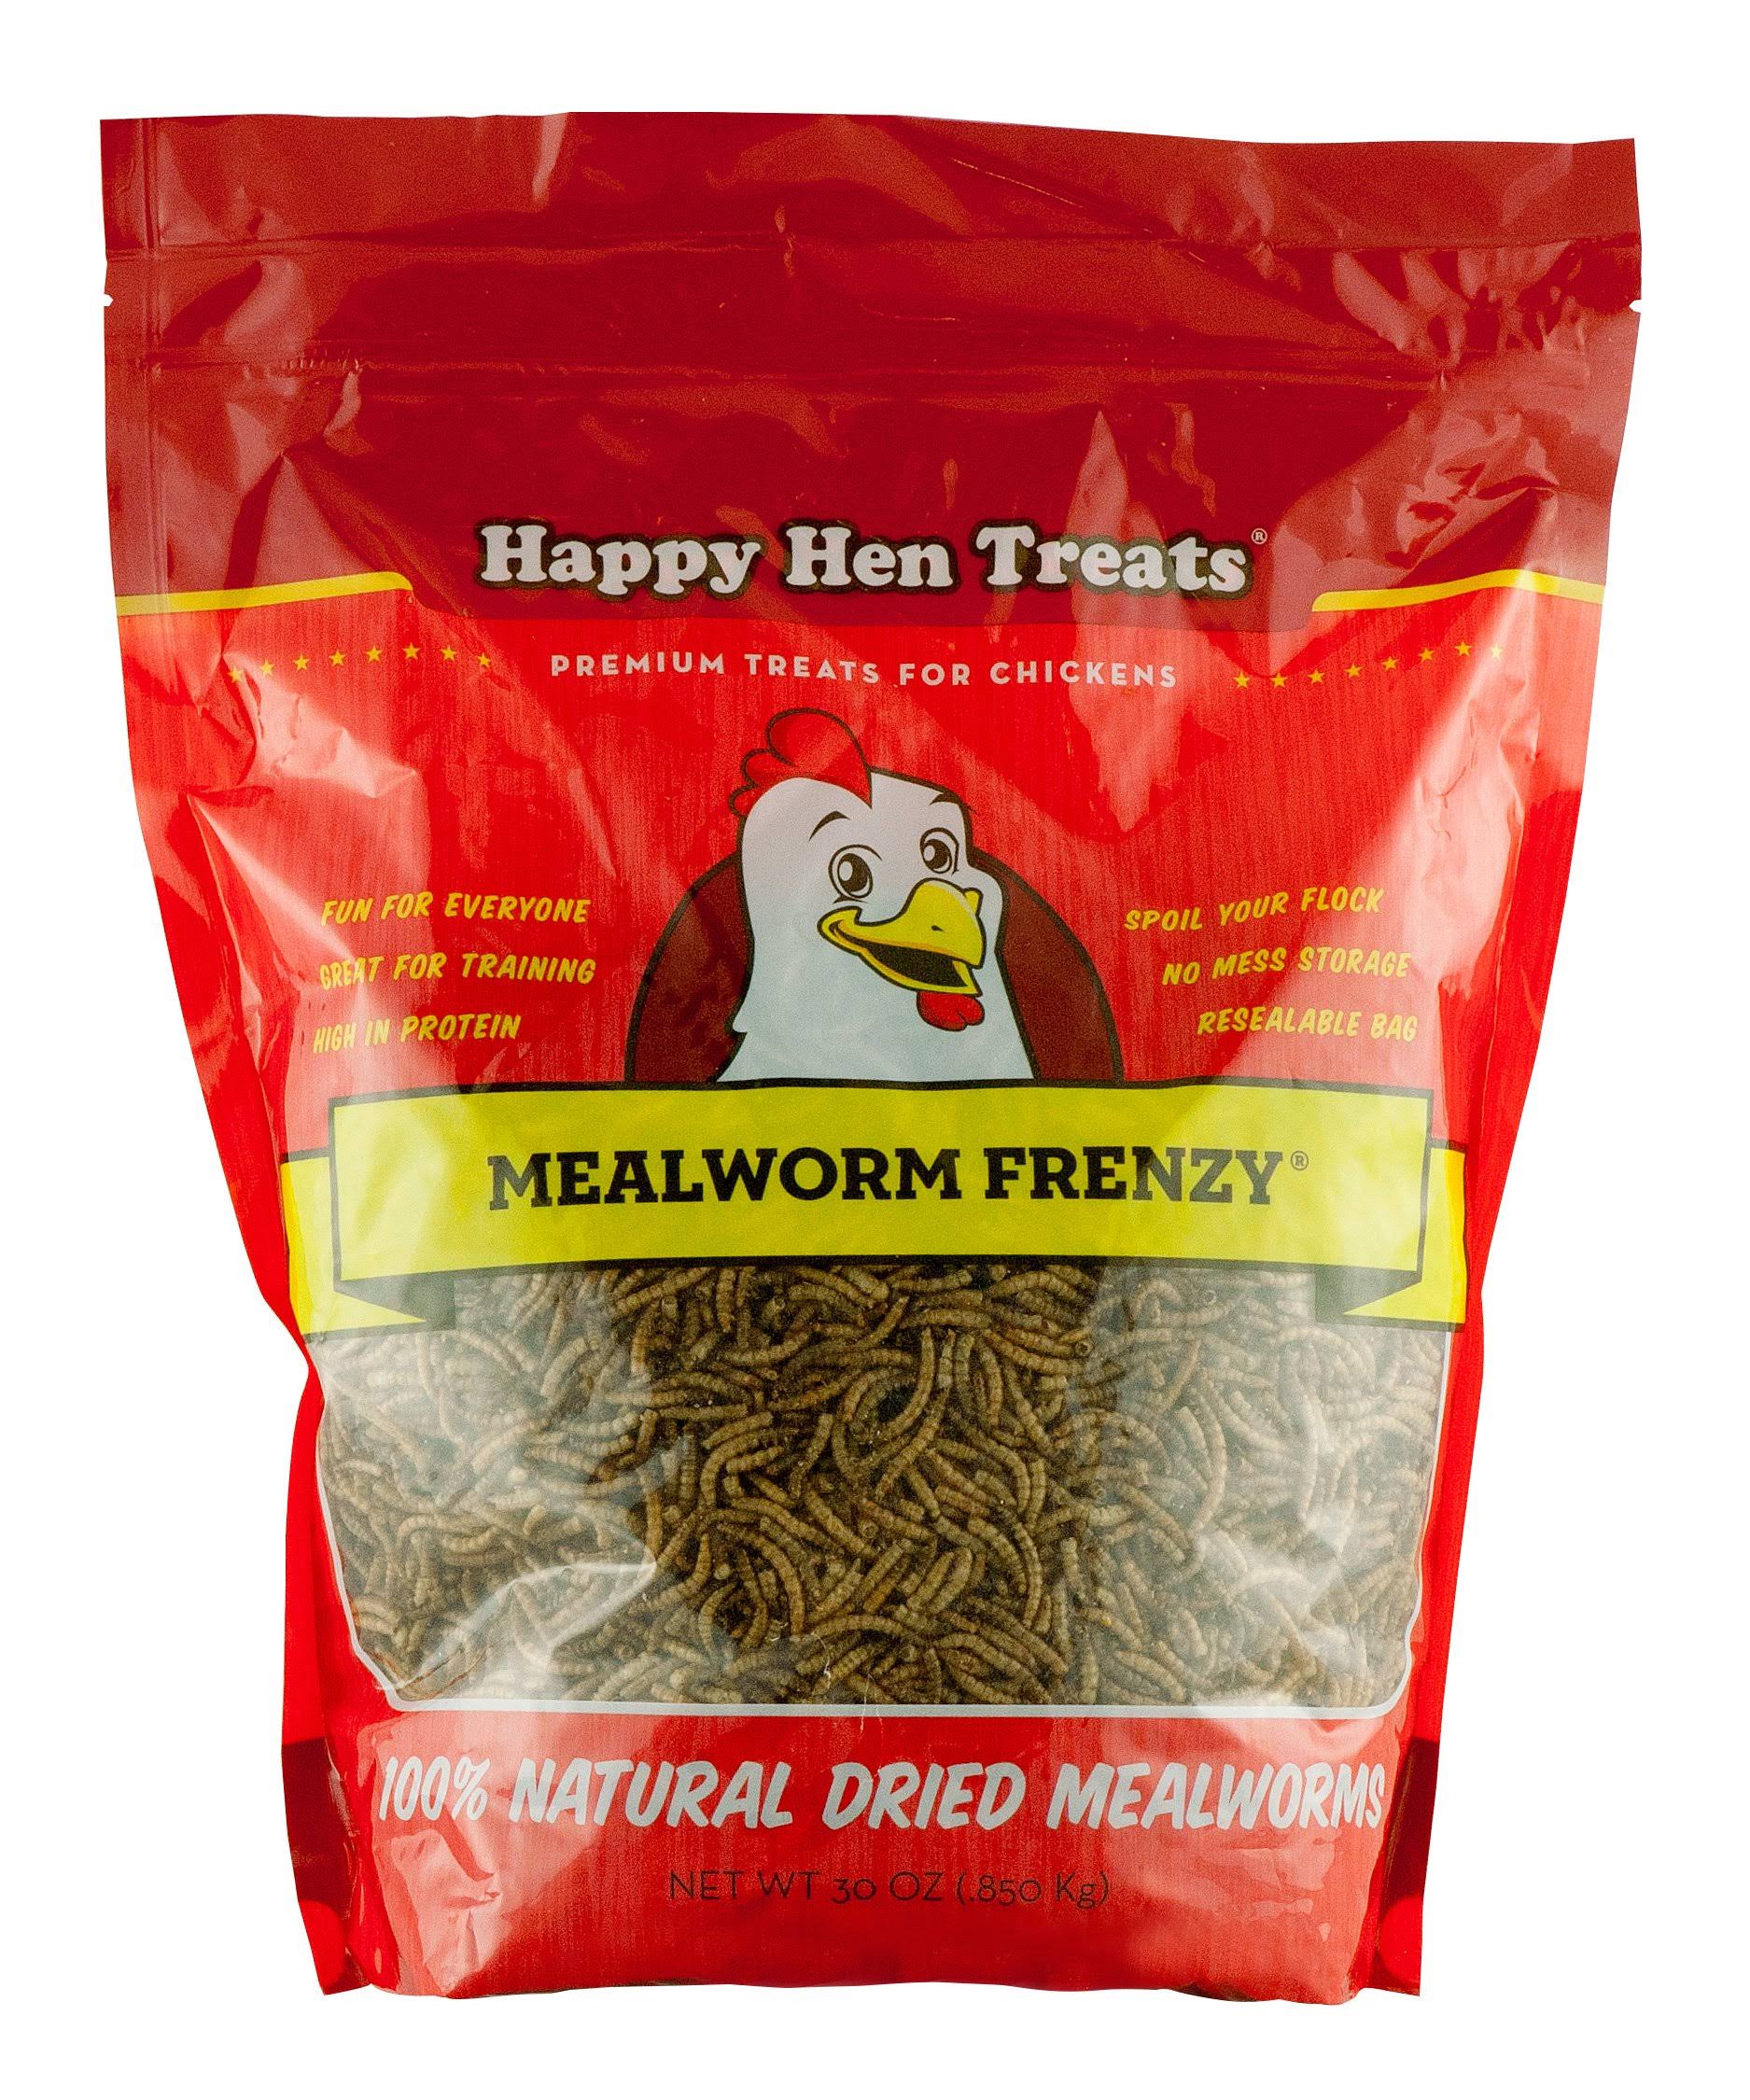 Happy Hen Treats Mealworm Frenzy Chicken Treat - 30oz